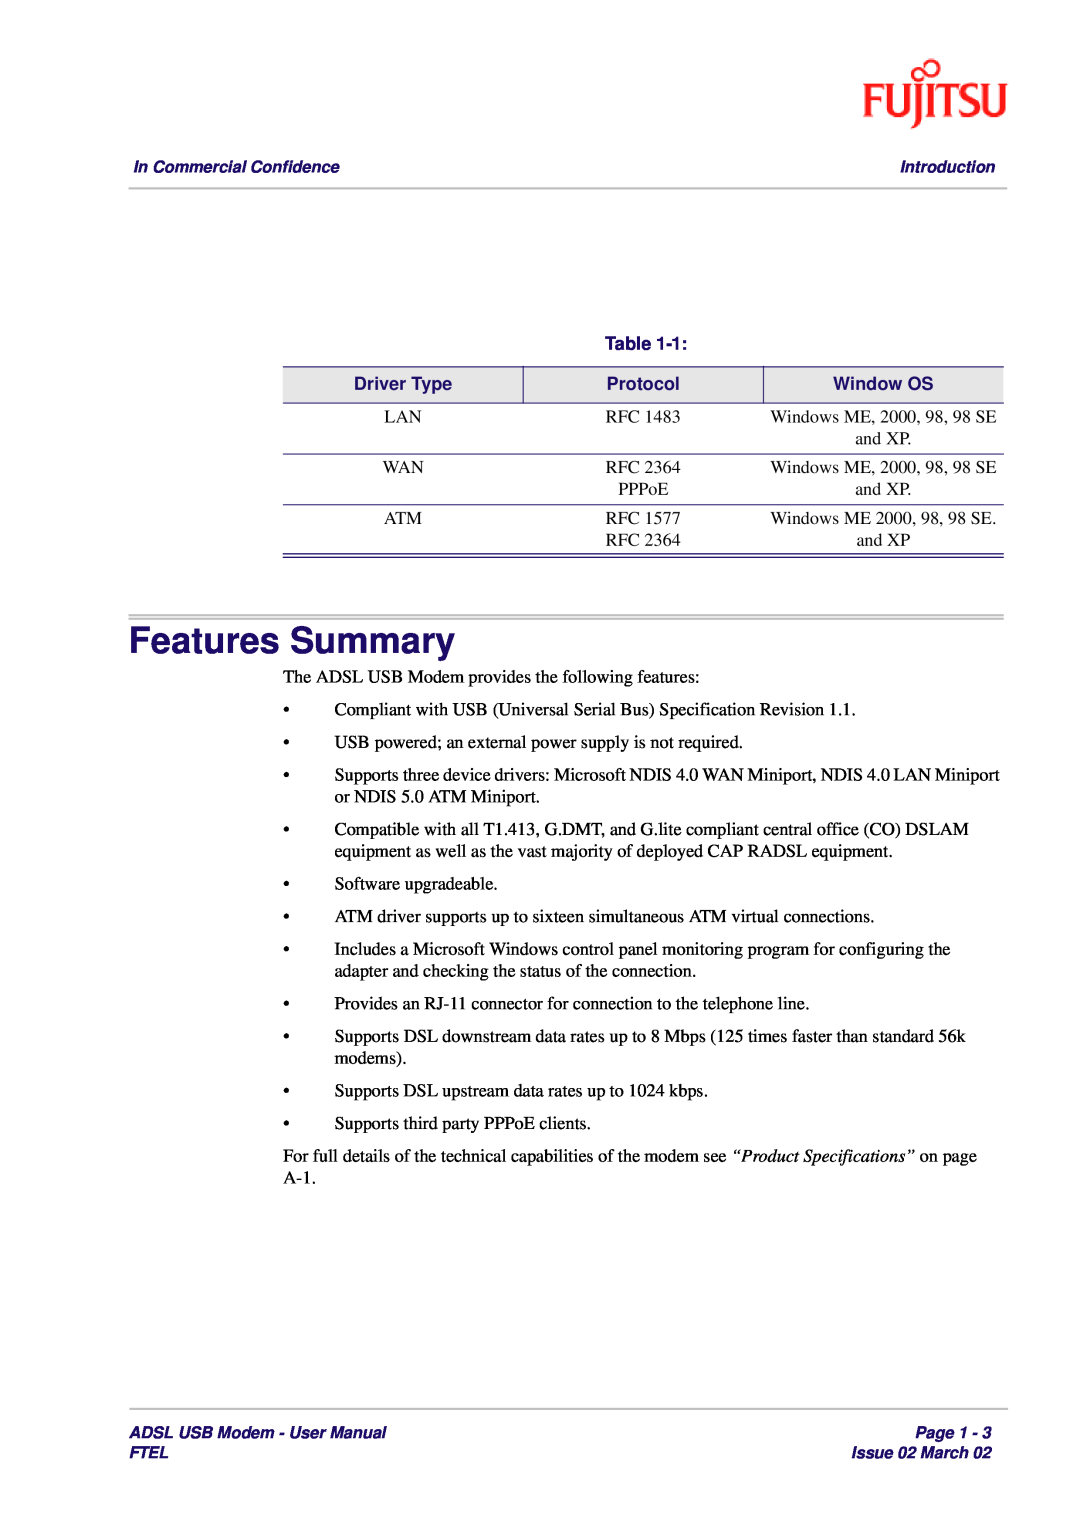 Fujitsu 3XAX-00803AAS user manual Features Summary, Driver Type, Protocol, Window OS 